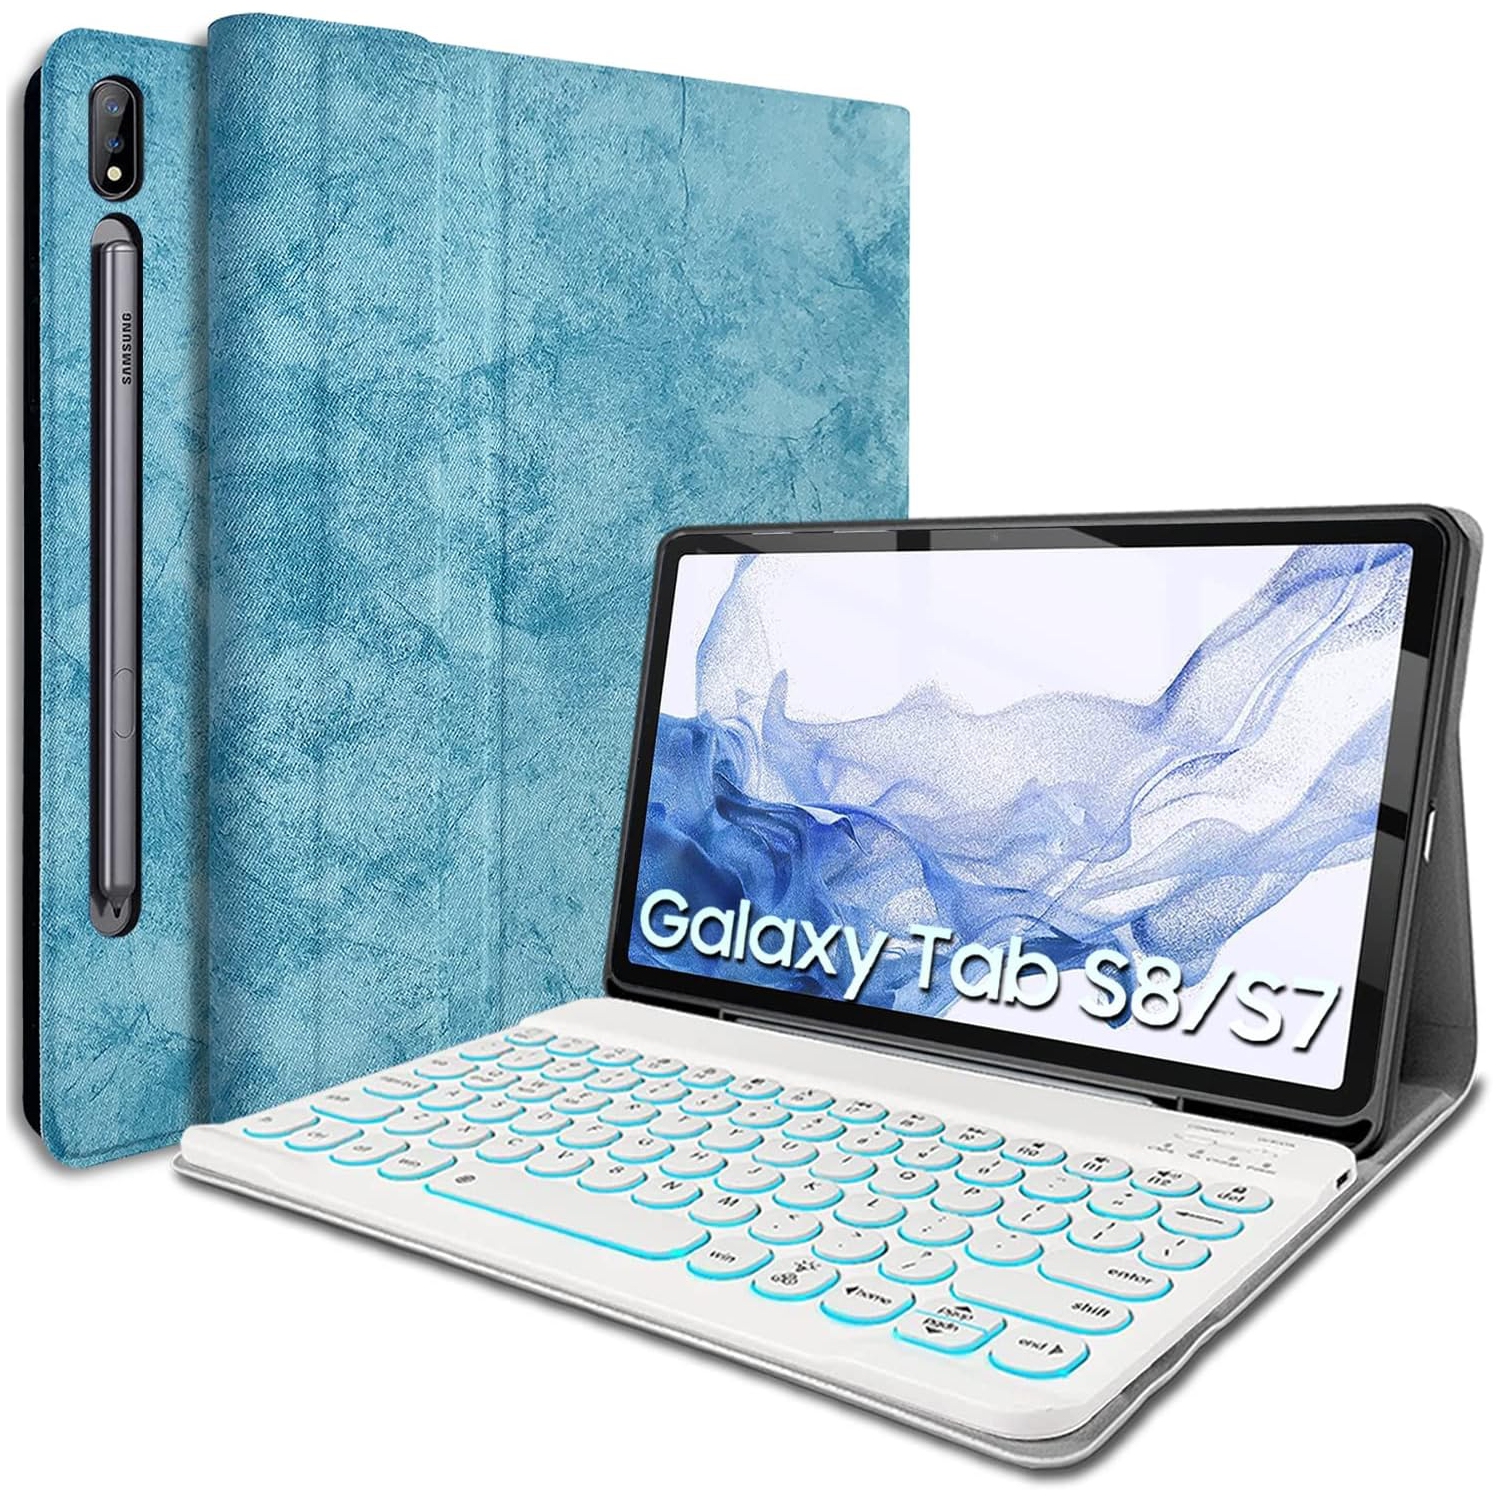 Galaxy Tab S8/ S7 11 Inch Backlit Keyboard Case, Multi-Angle 7 Color Backlight Detachable Wireless Keyboard